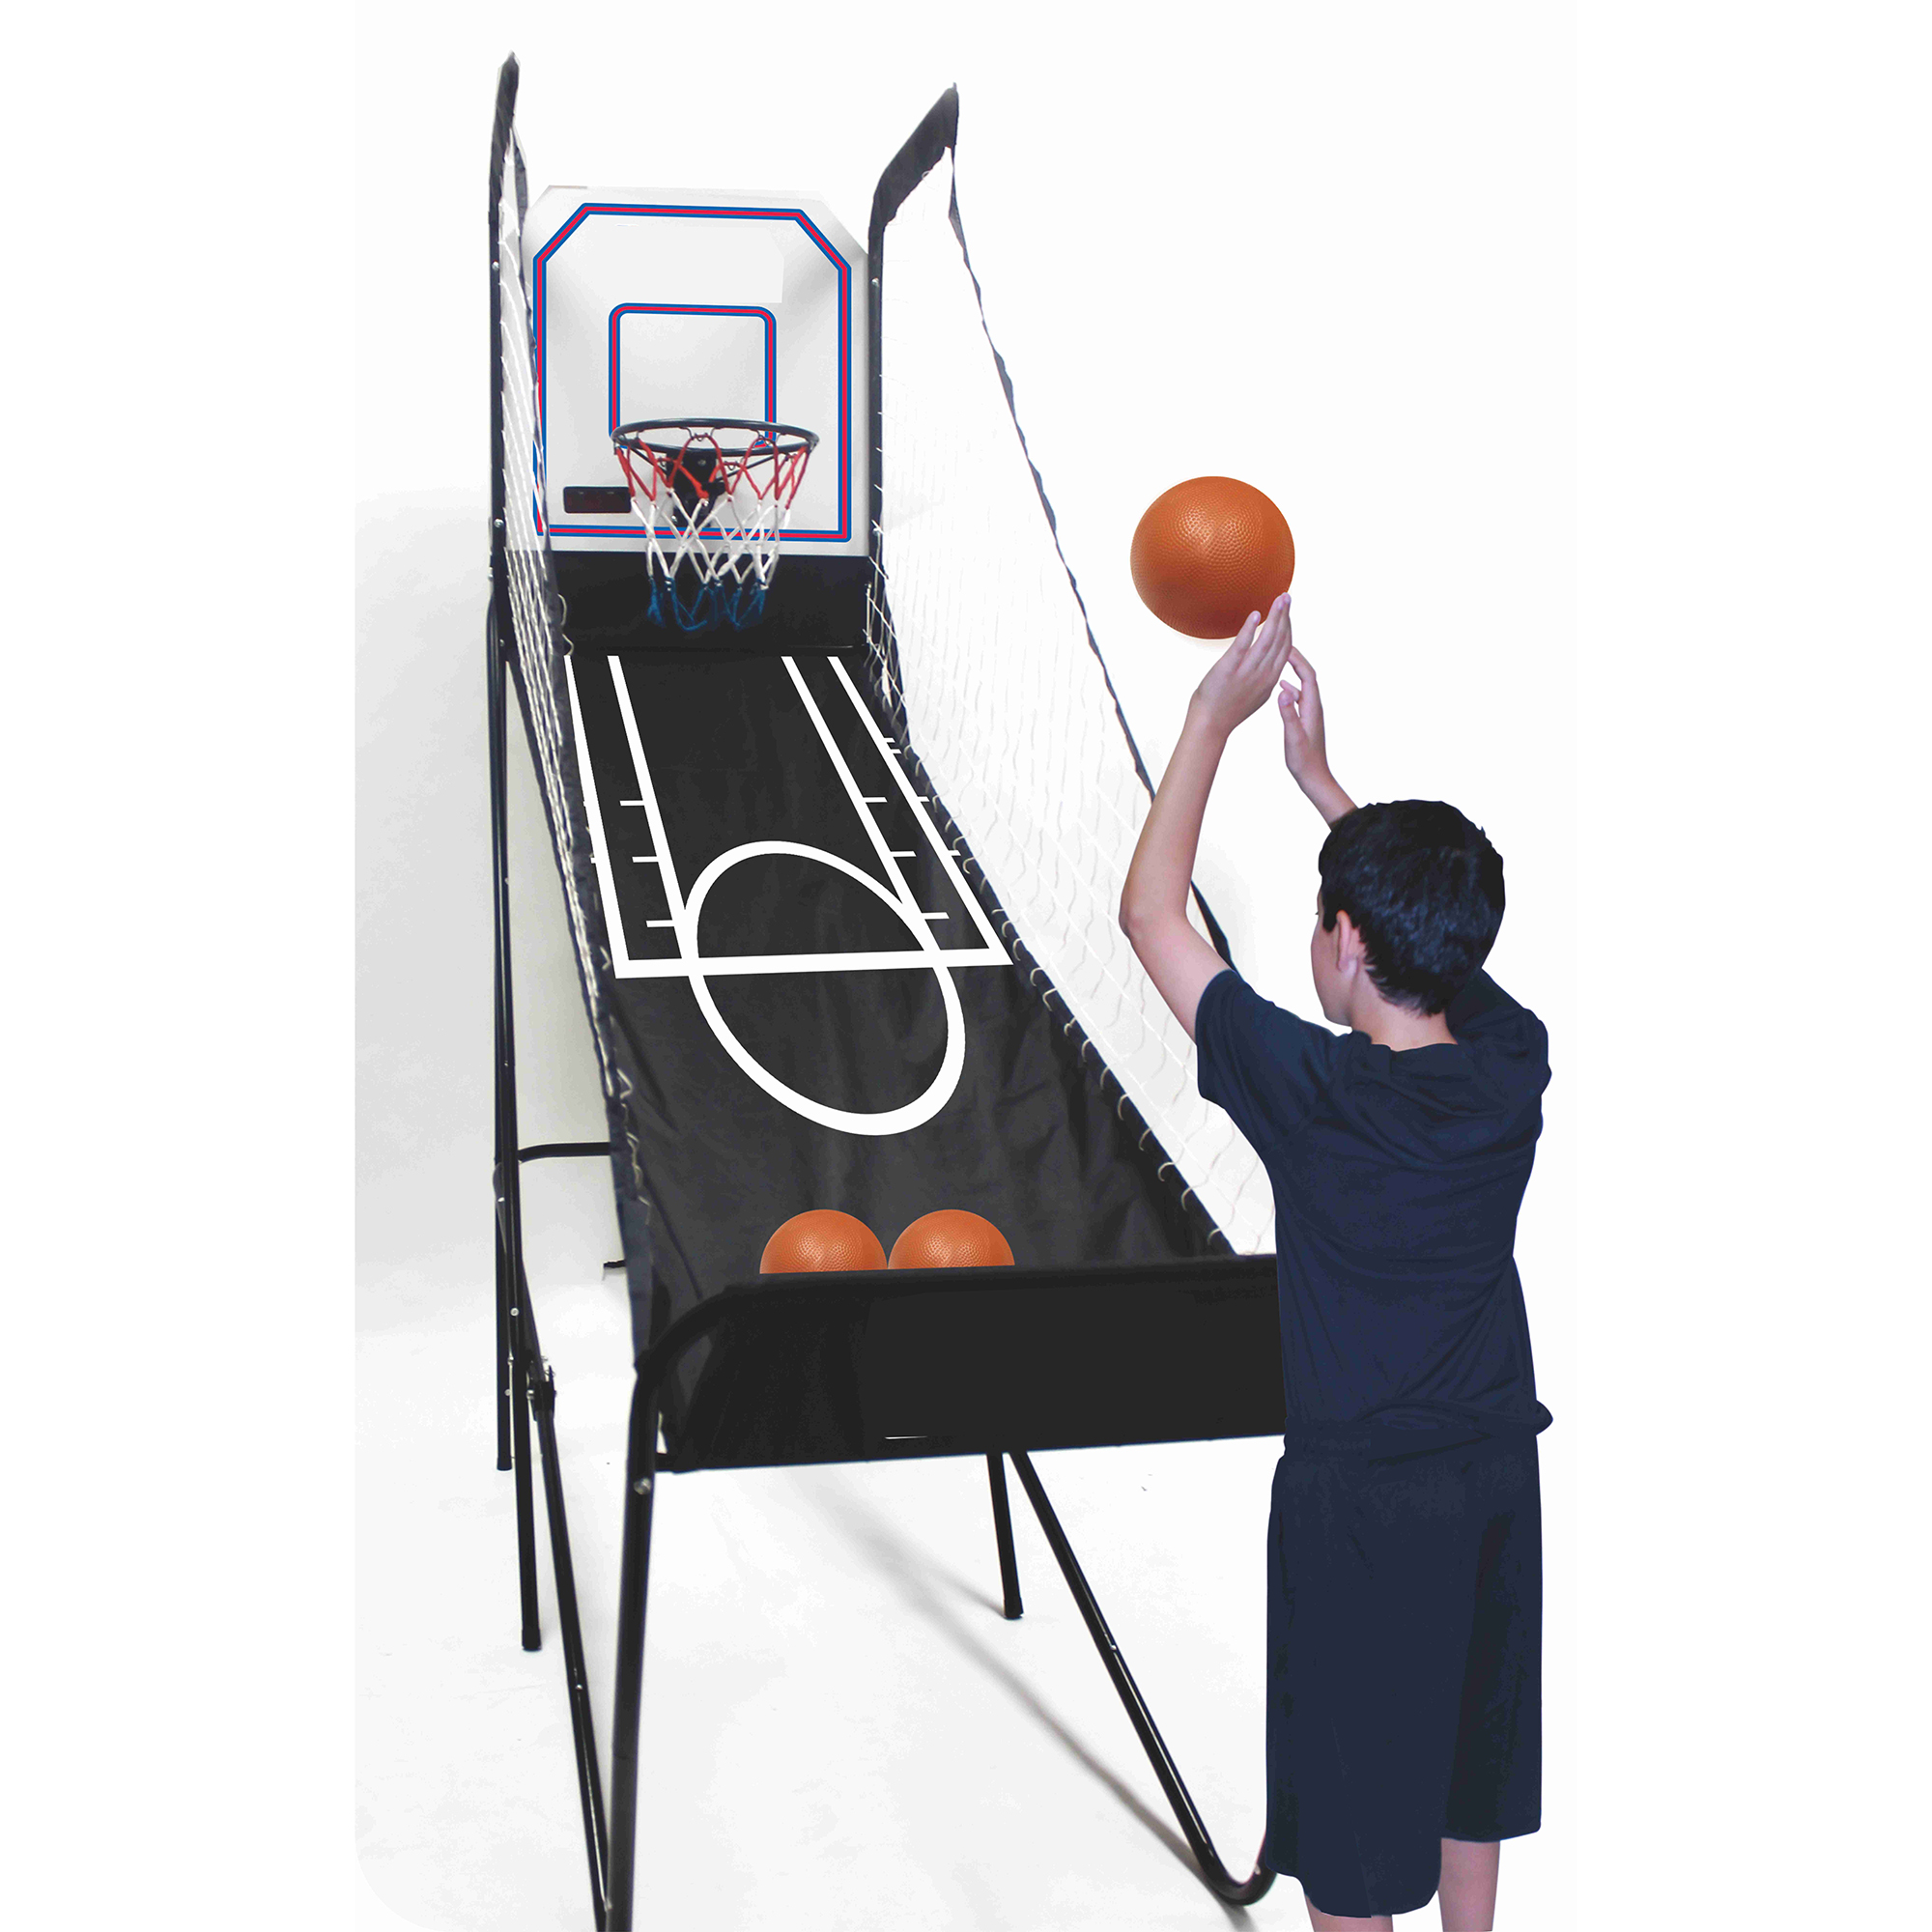 Basketball Arcade Game - 1 Player Set